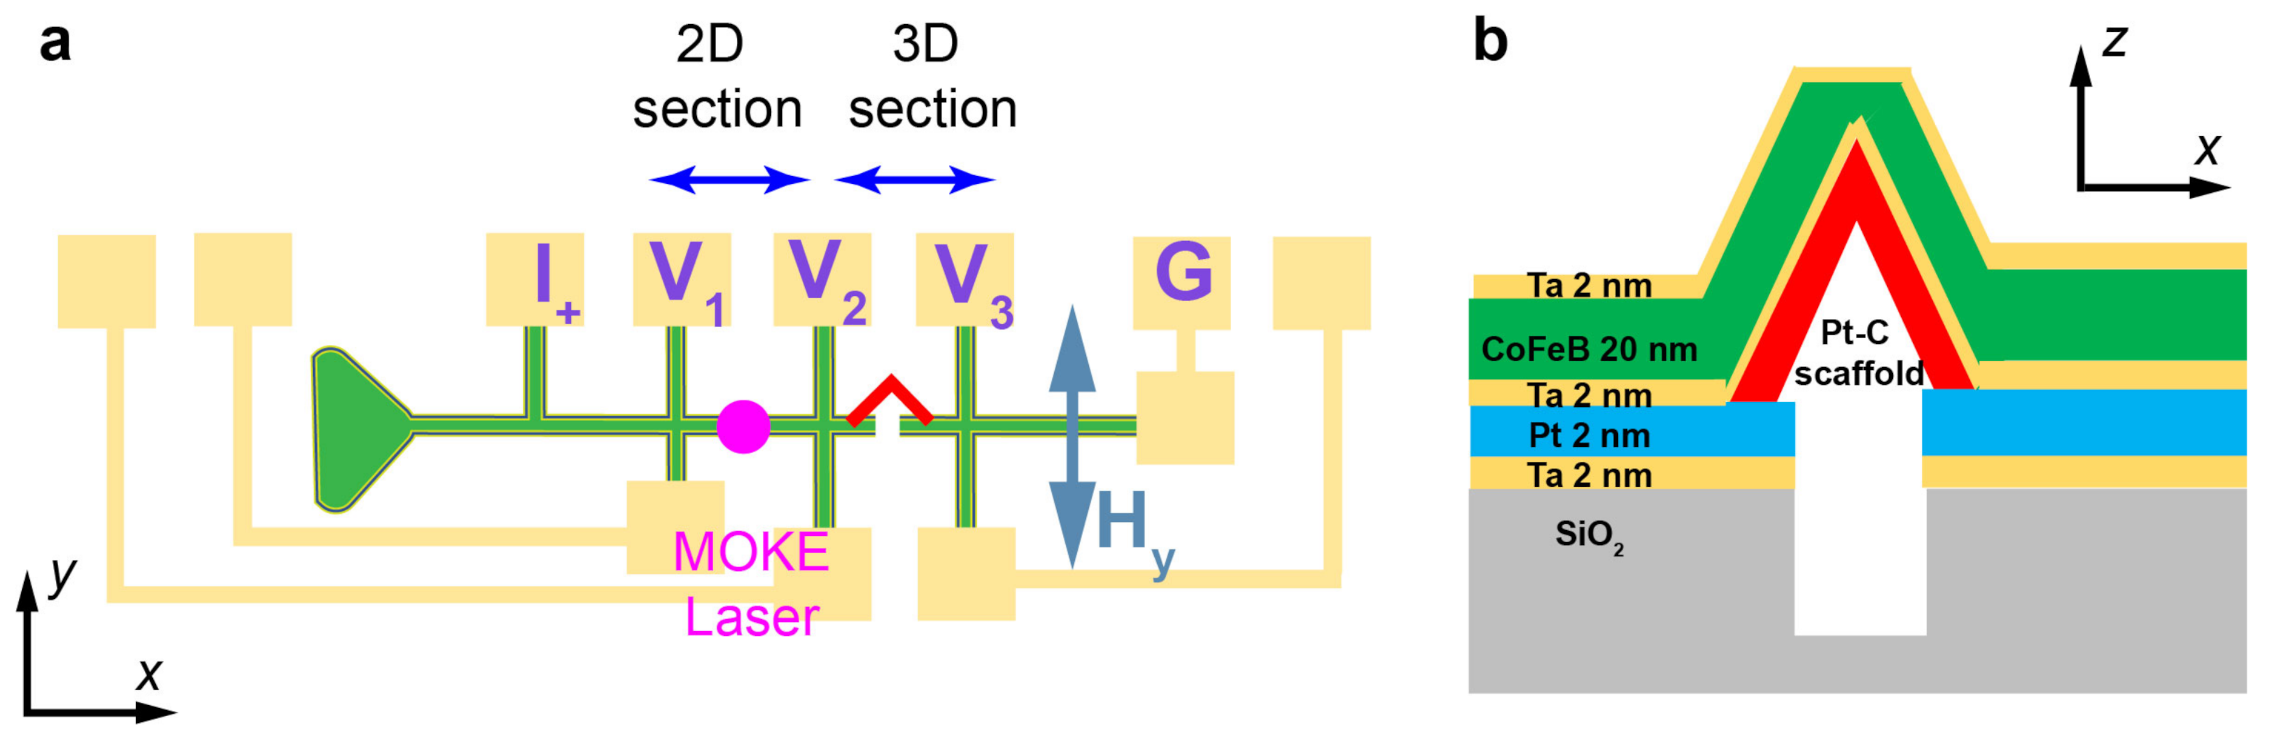 3D Lab Nano Network Transport Signature V5 Lecteurs multimédia - 3D